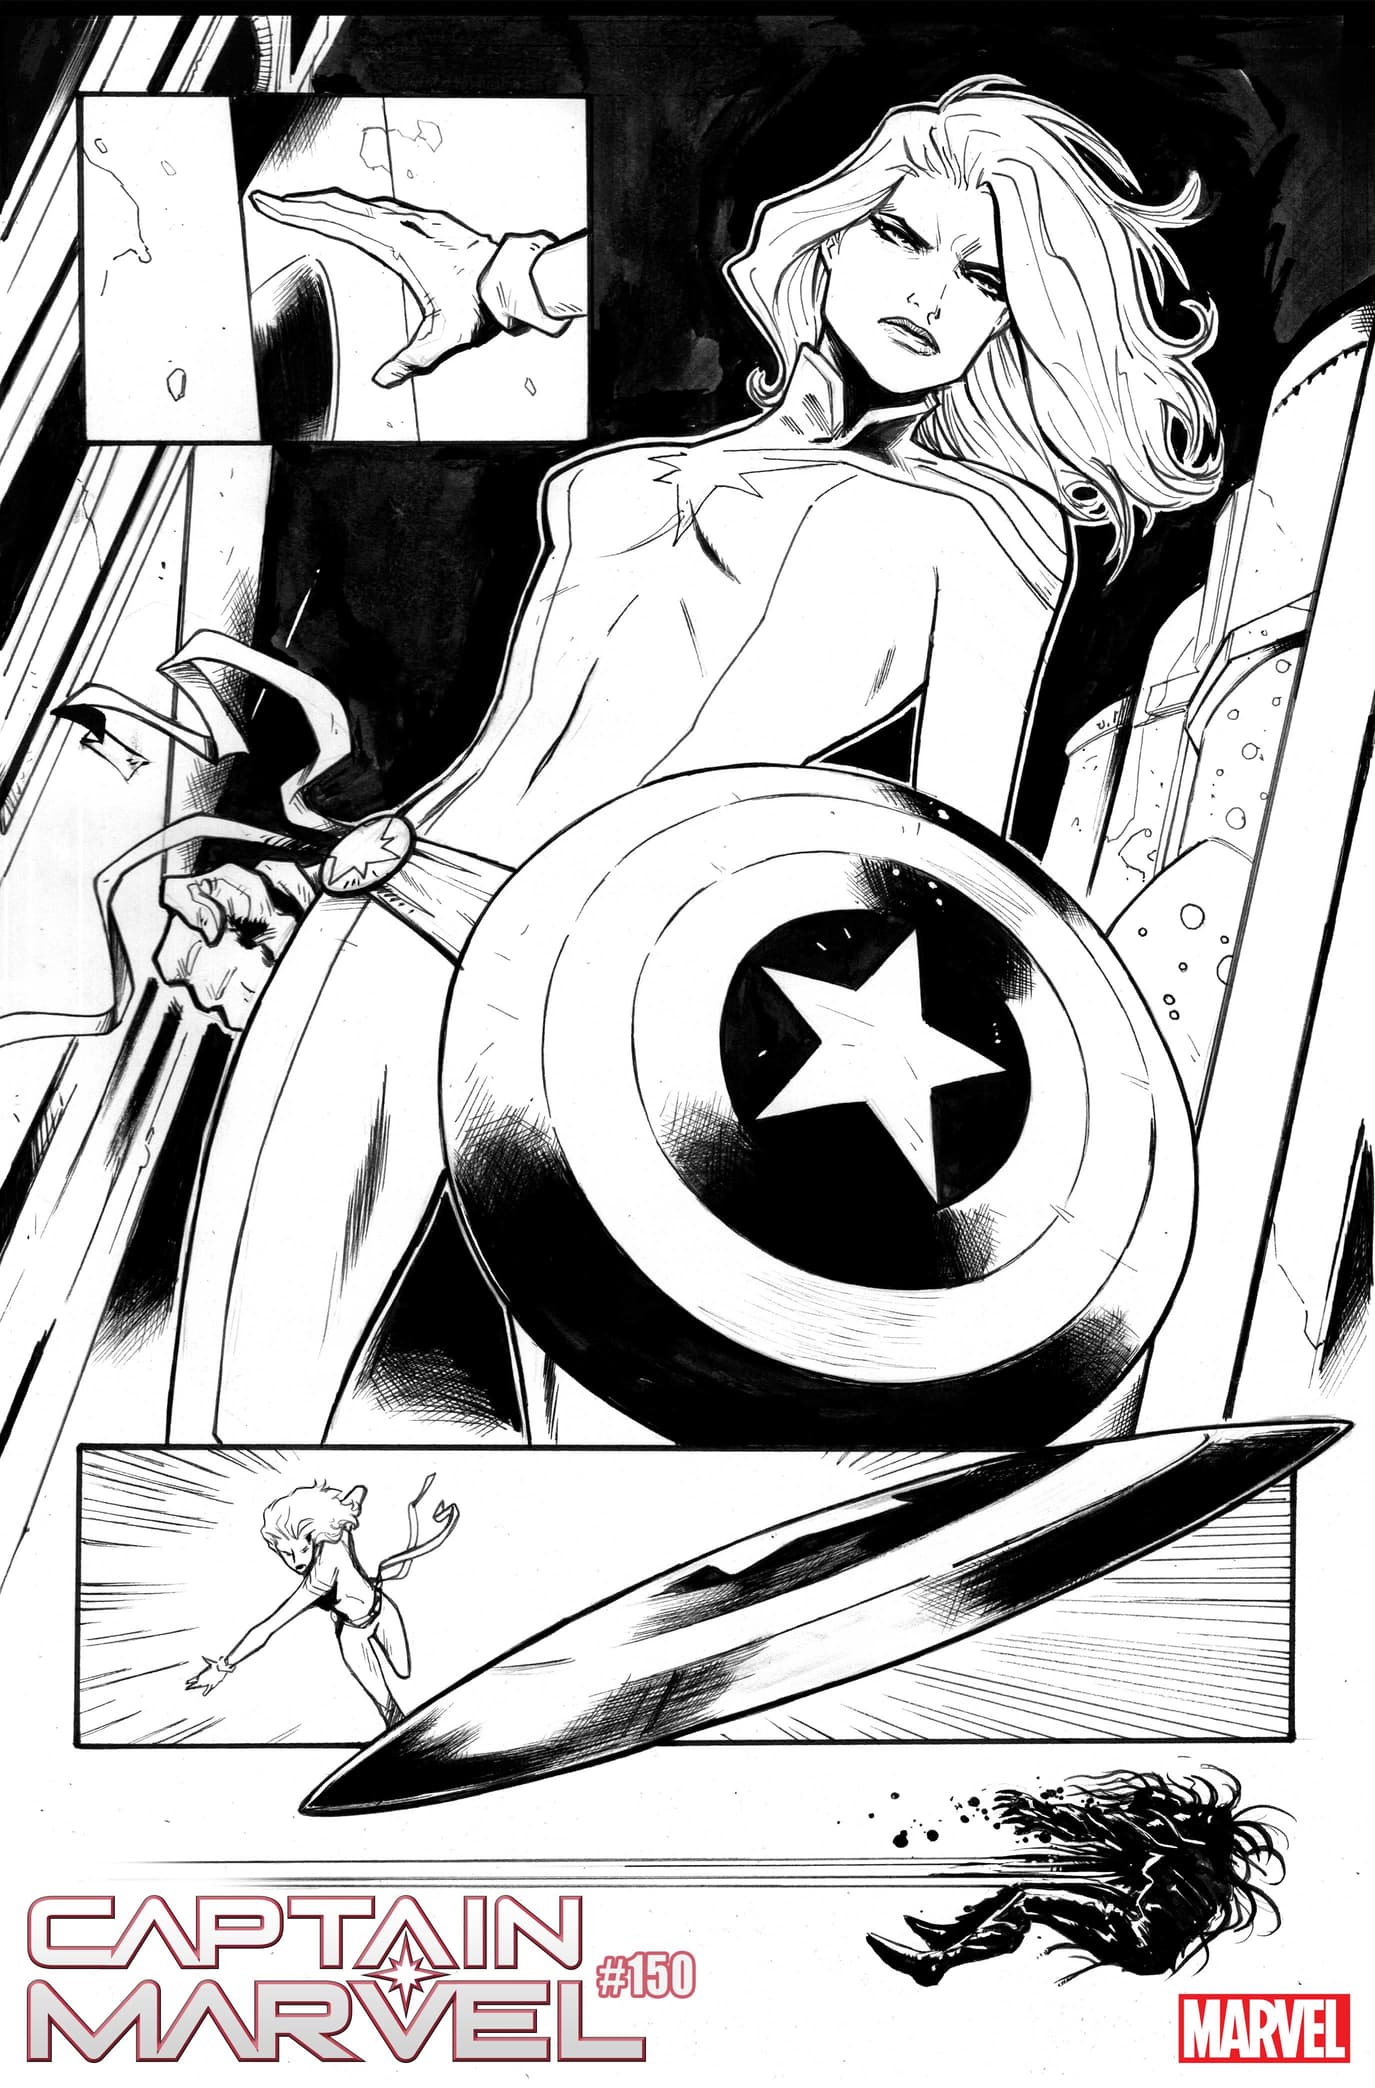 Captain Marvel #16 preview art